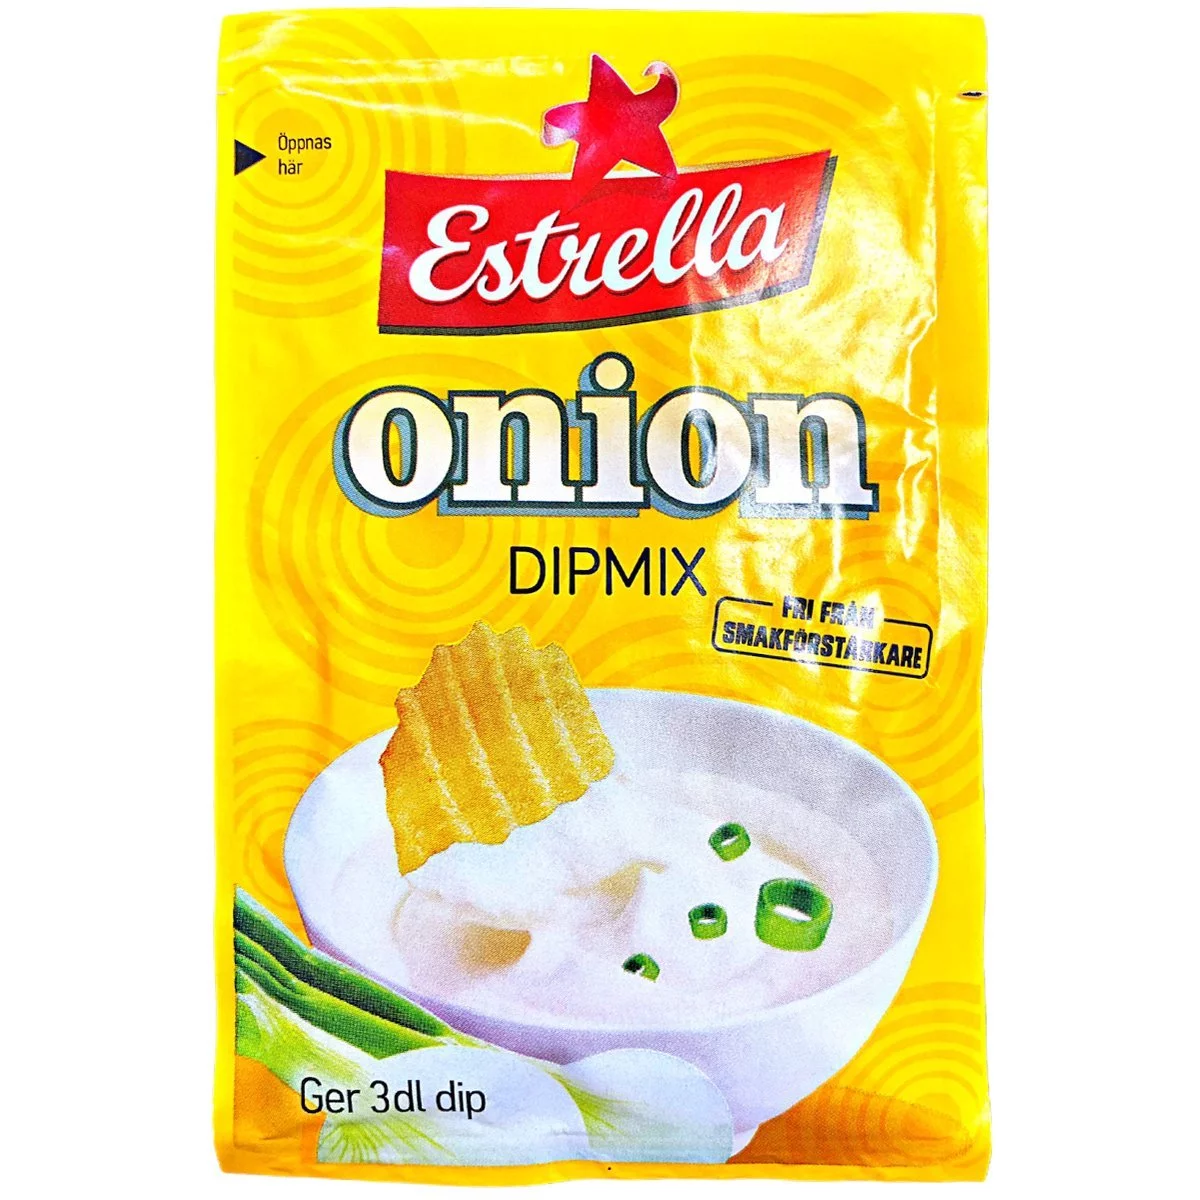 Estrella Dipmix Onion (22g) 1